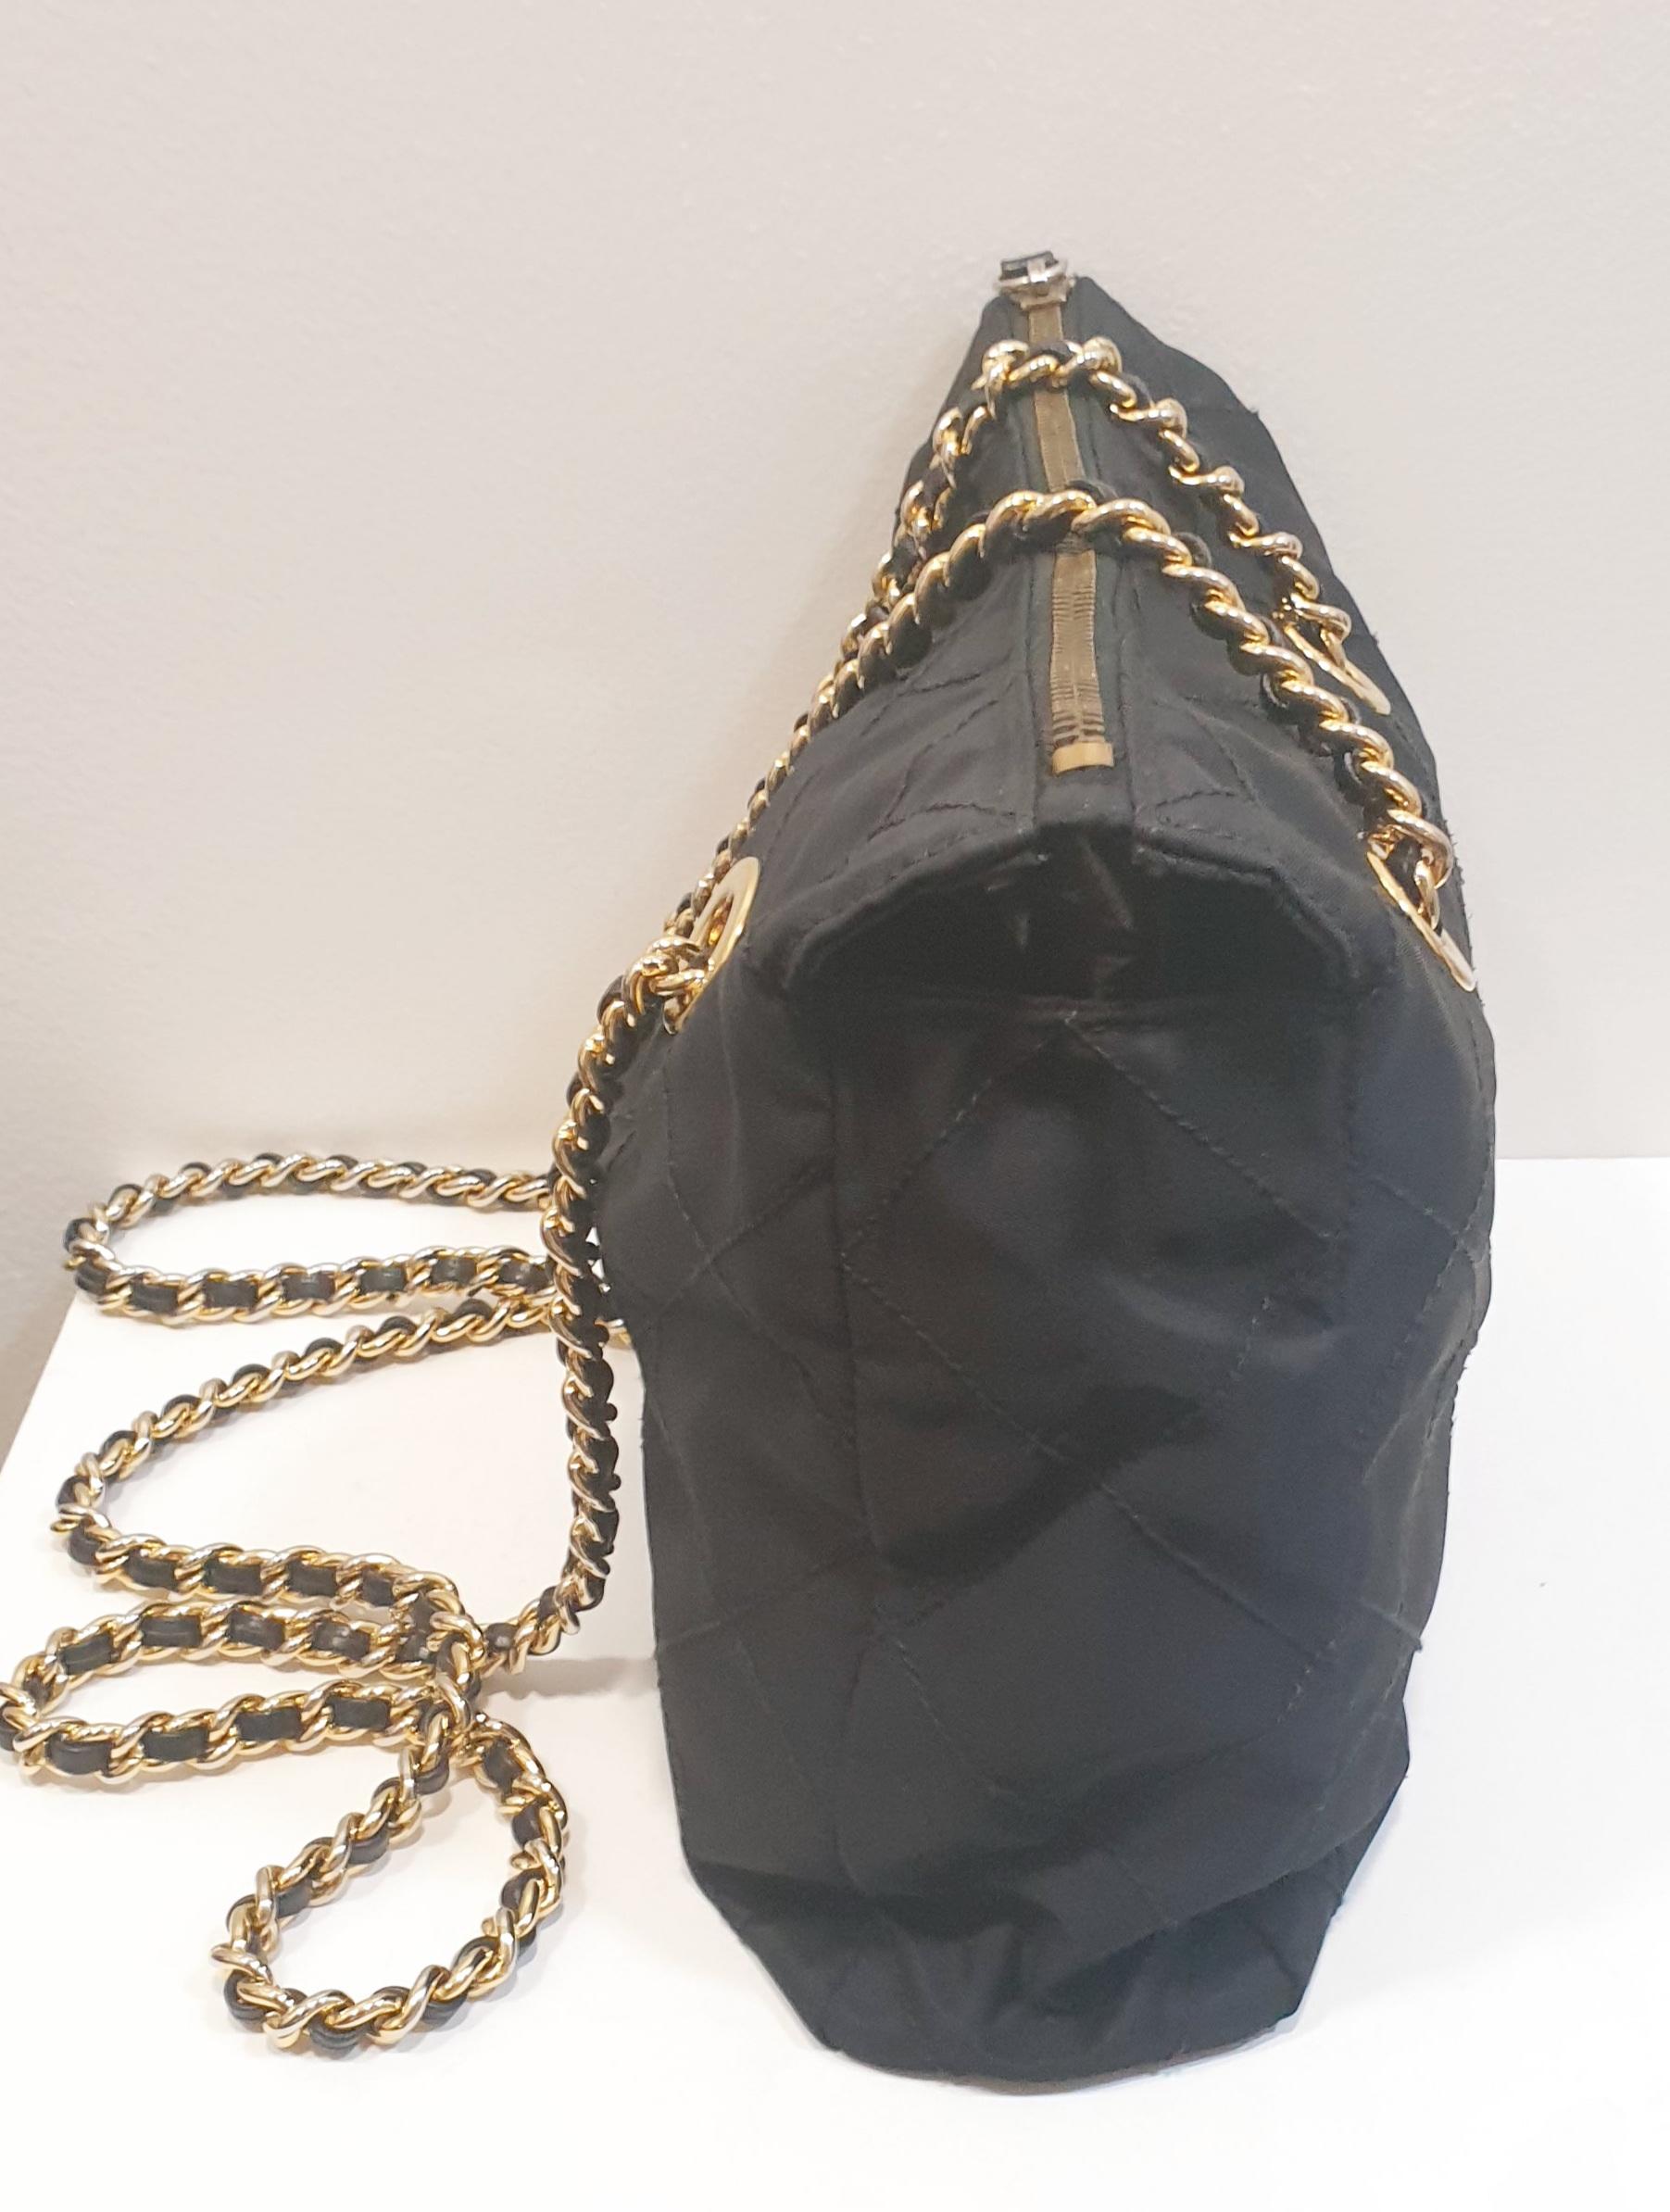 prada nylon bag with chain strap